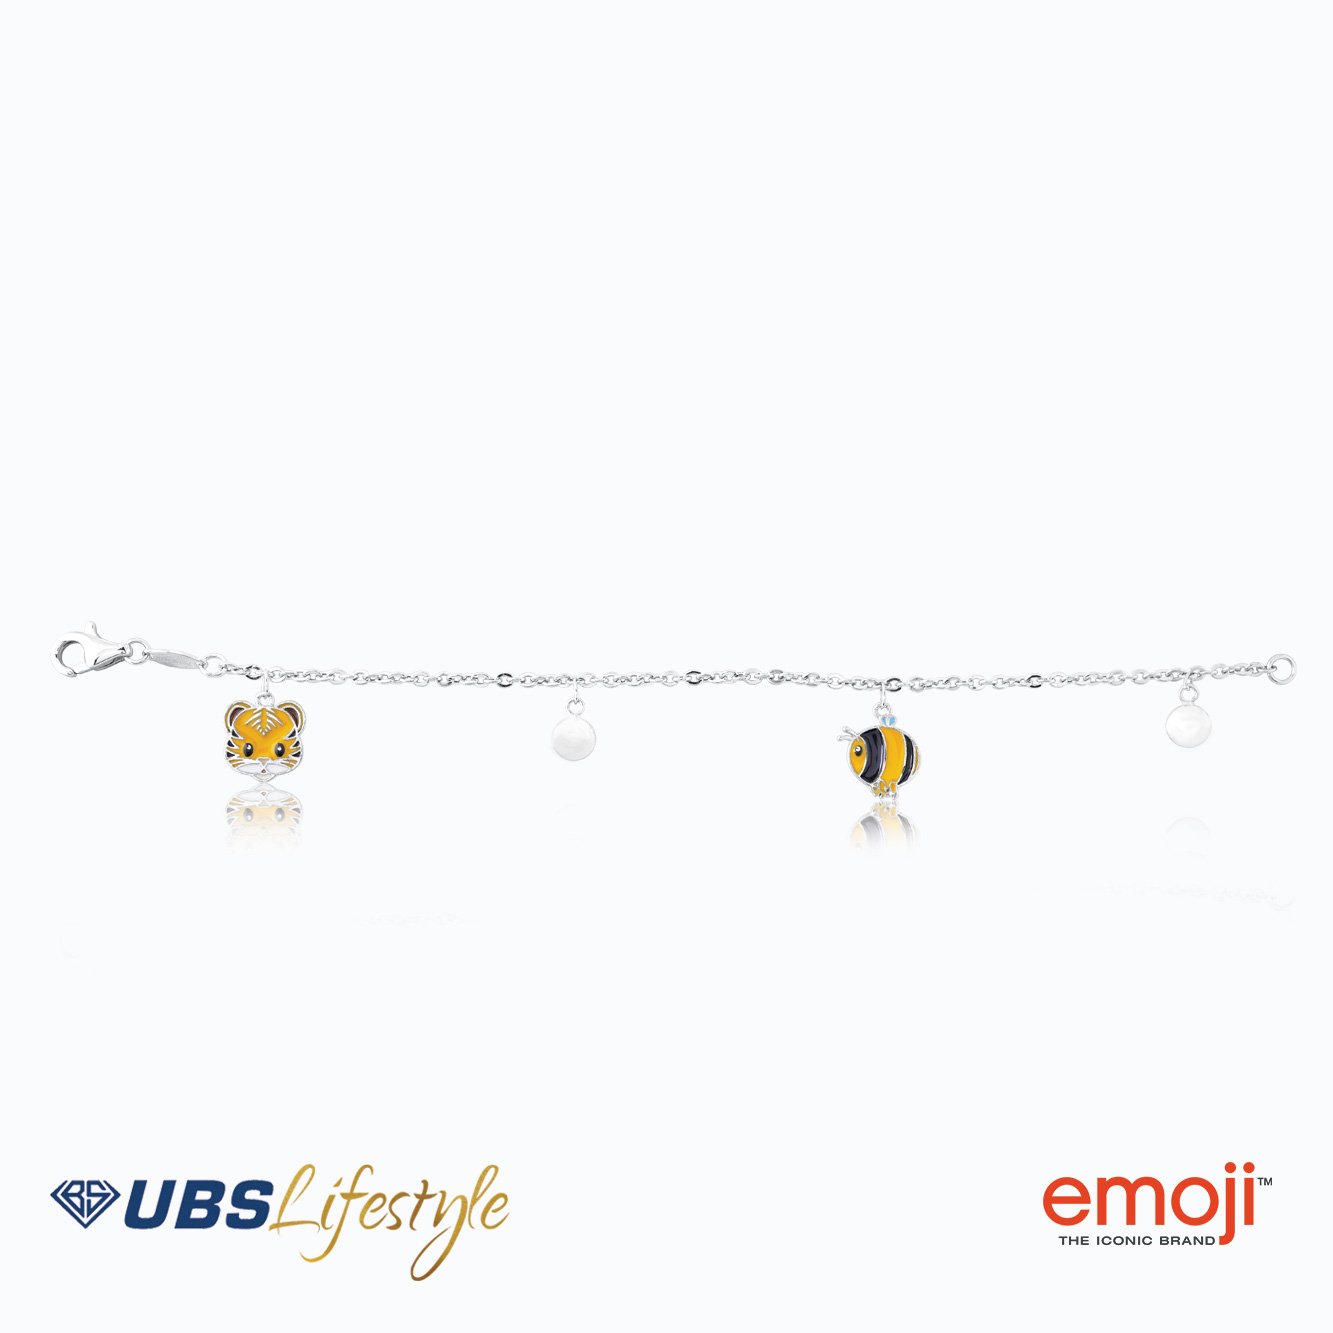 UBS Gelang Emas Anak Emoji - Hgq0002W - 17K